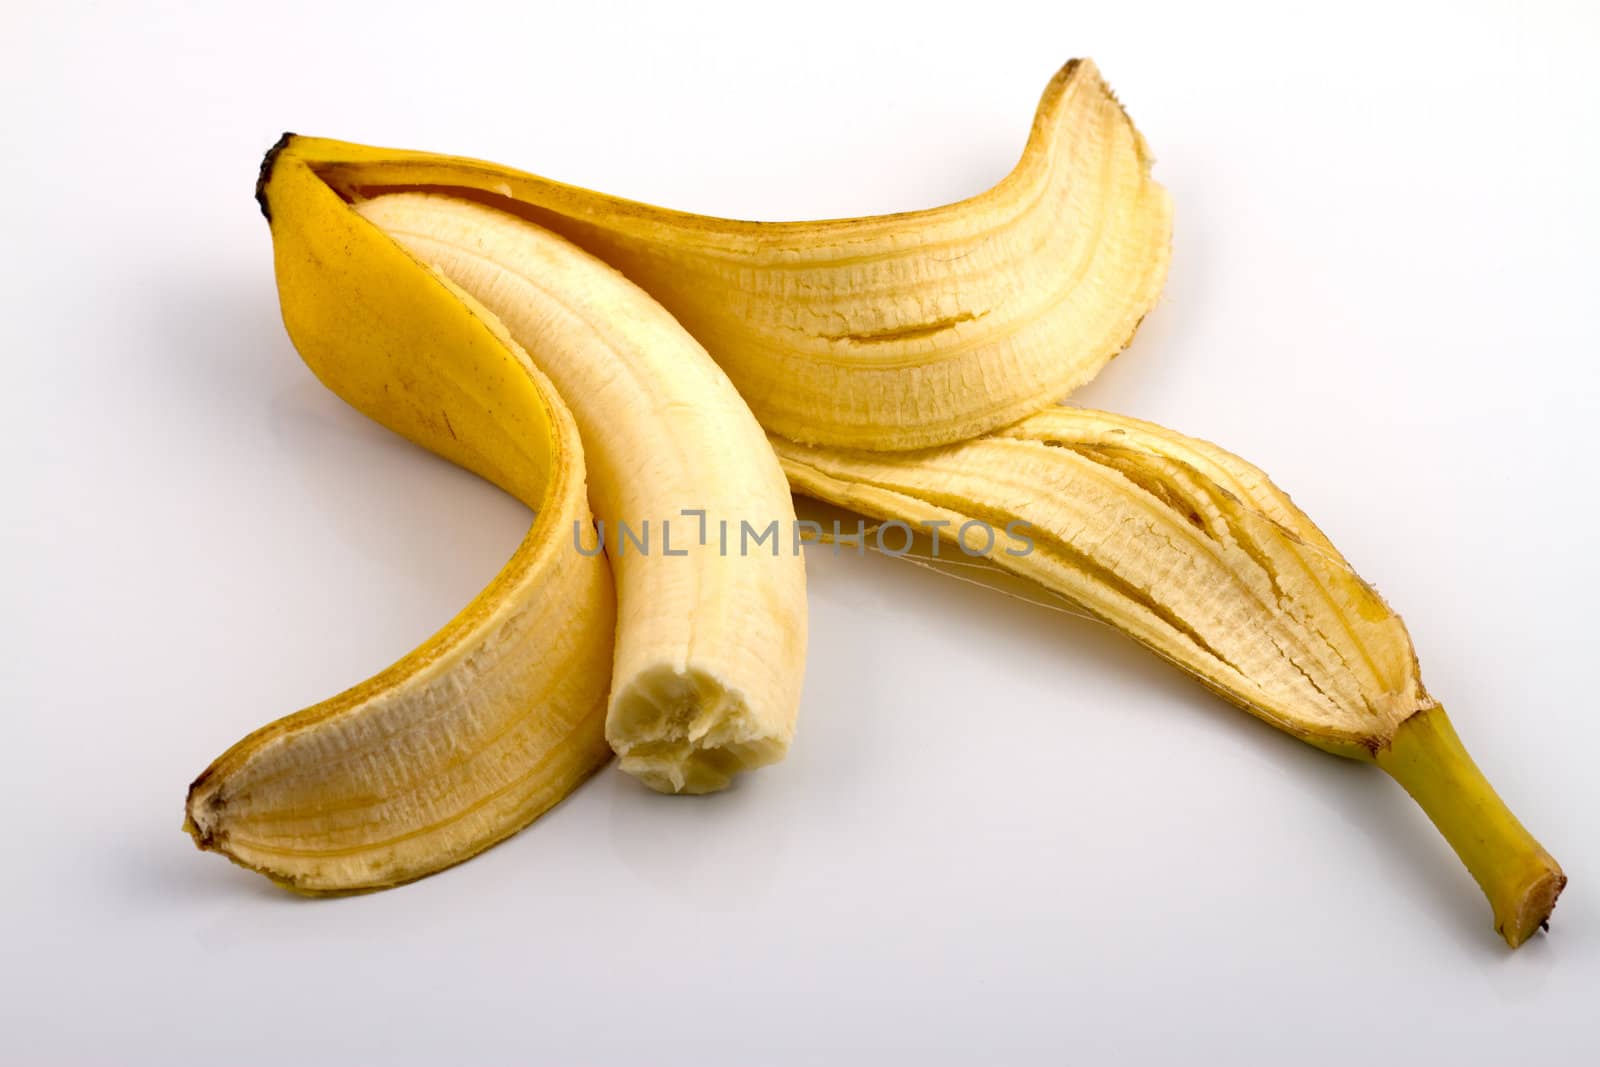 Peeled Banana with bite marks by lavsen